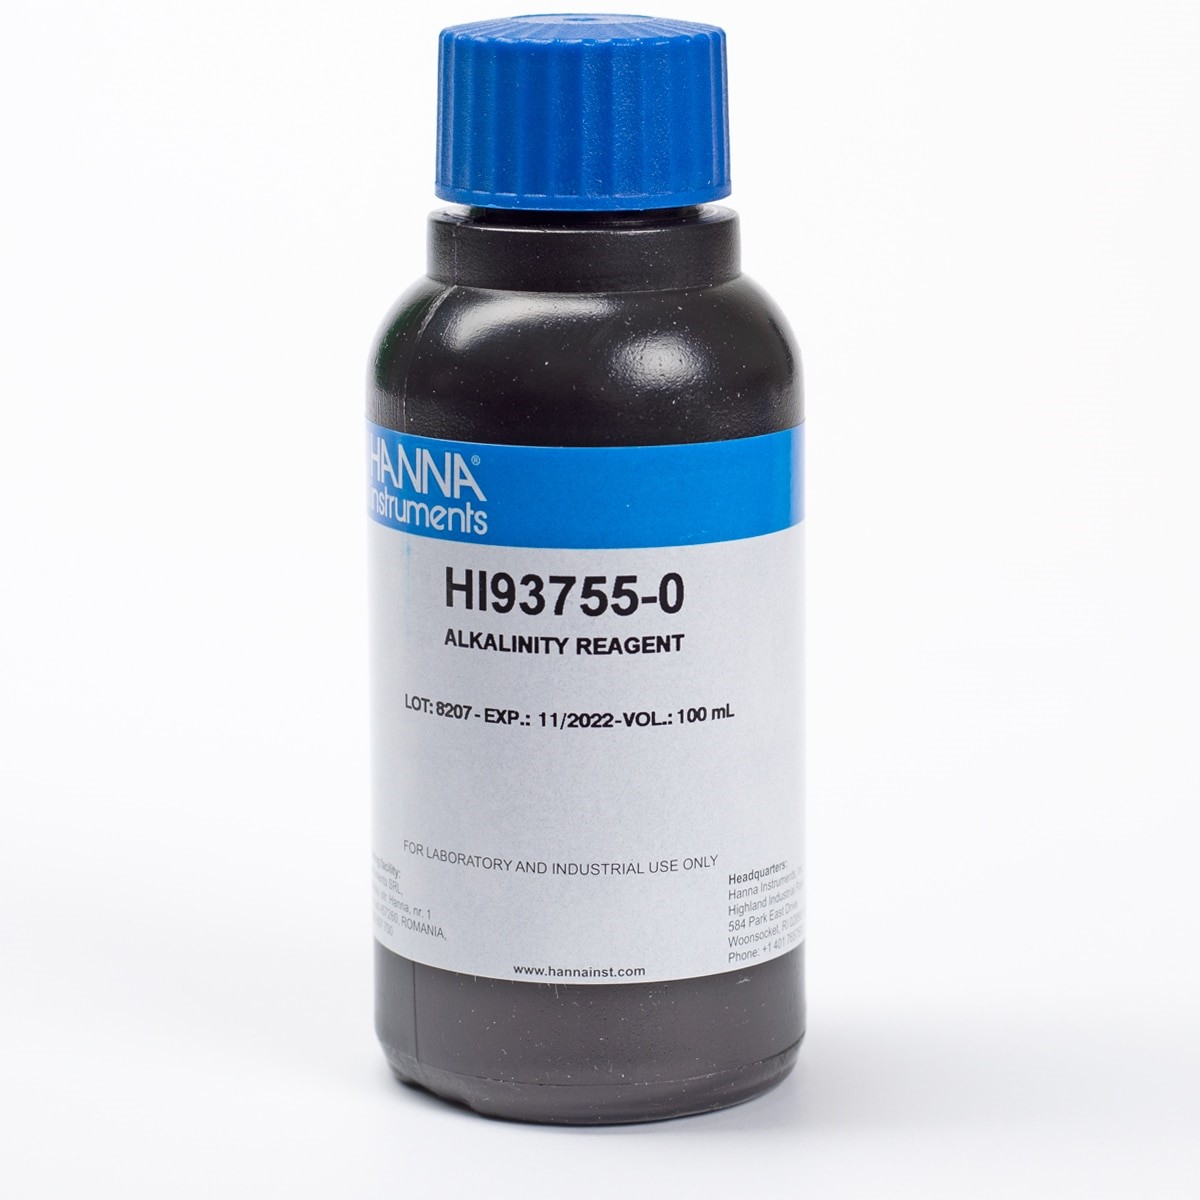 HI93755-01 Alkalinity Reagents (100 tests)